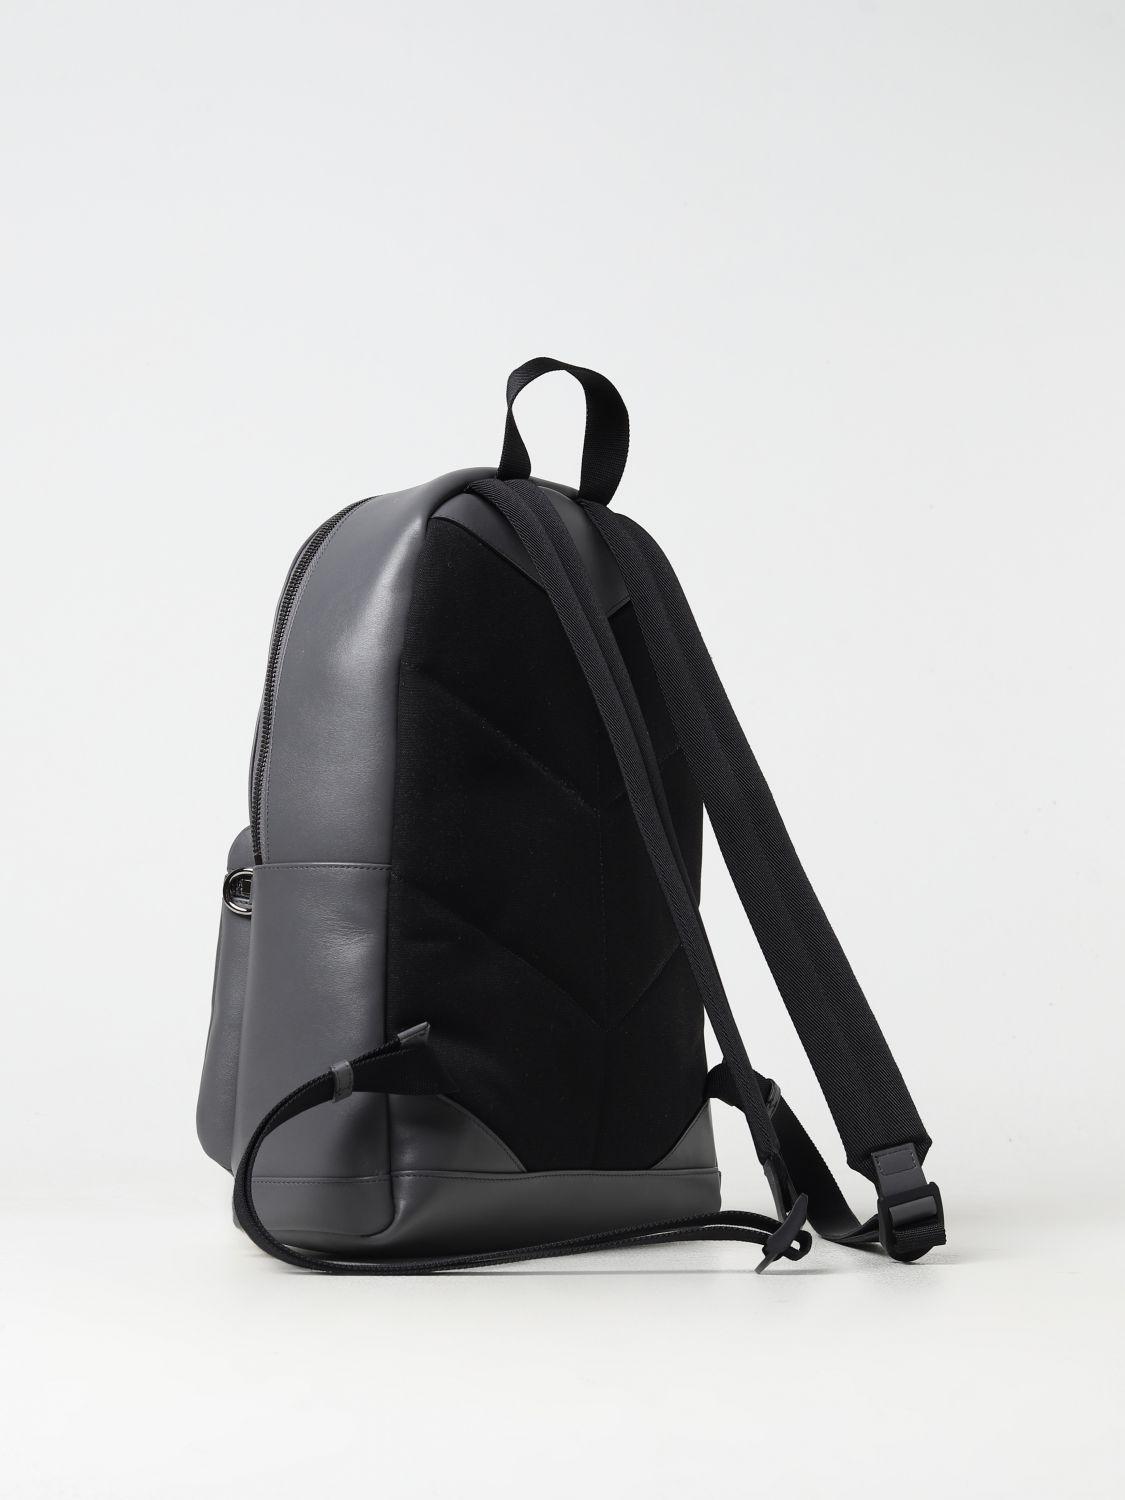 Luxury backpack - Wilmer Jimmy Choo black leather backpack